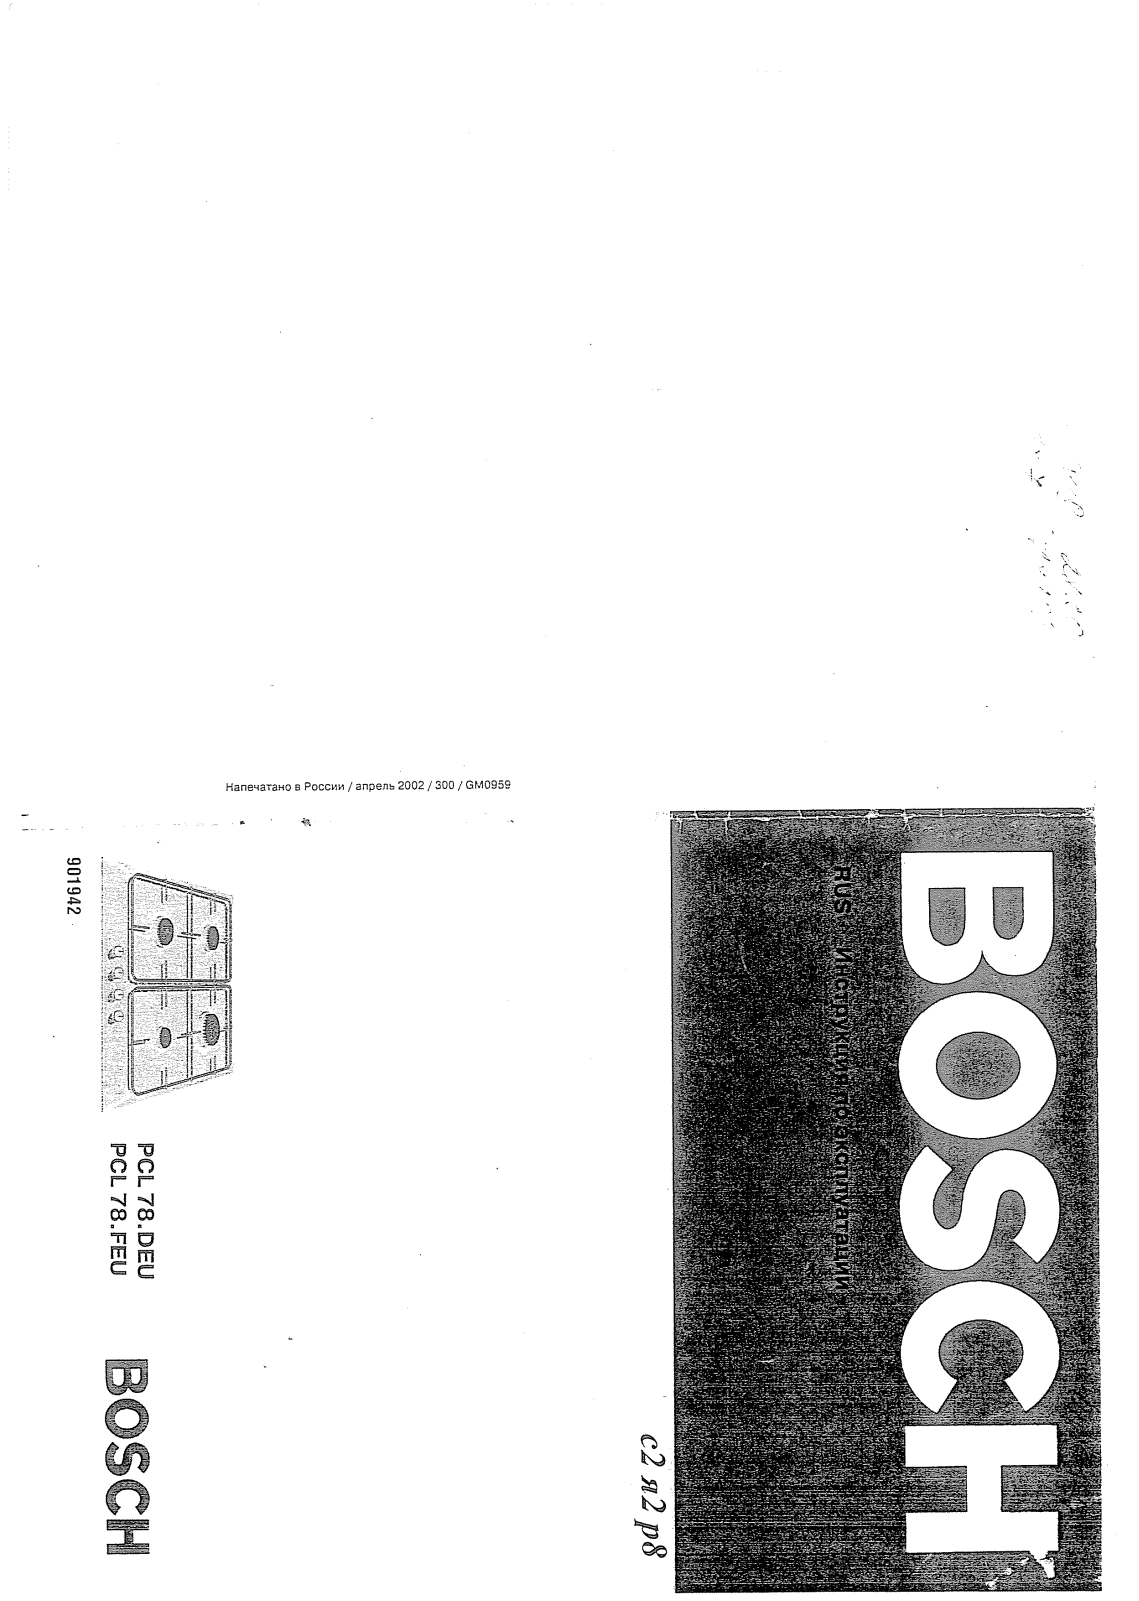 Bosch PCL 78.DEU User Manual